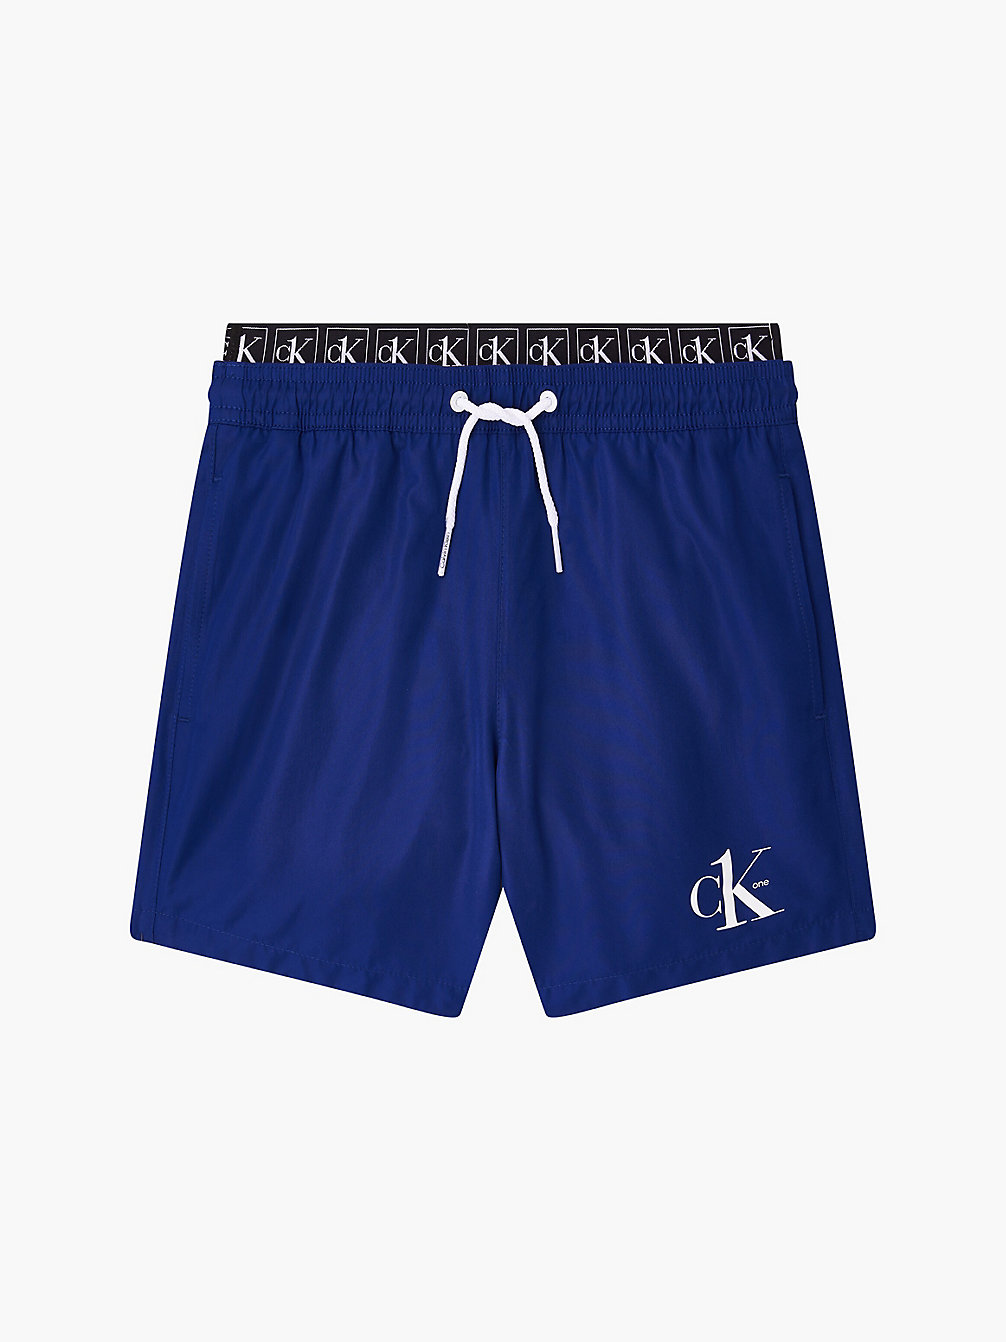 BOLD BLUE Boys Swim Shorts - CK One undefined boys Calvin Klein